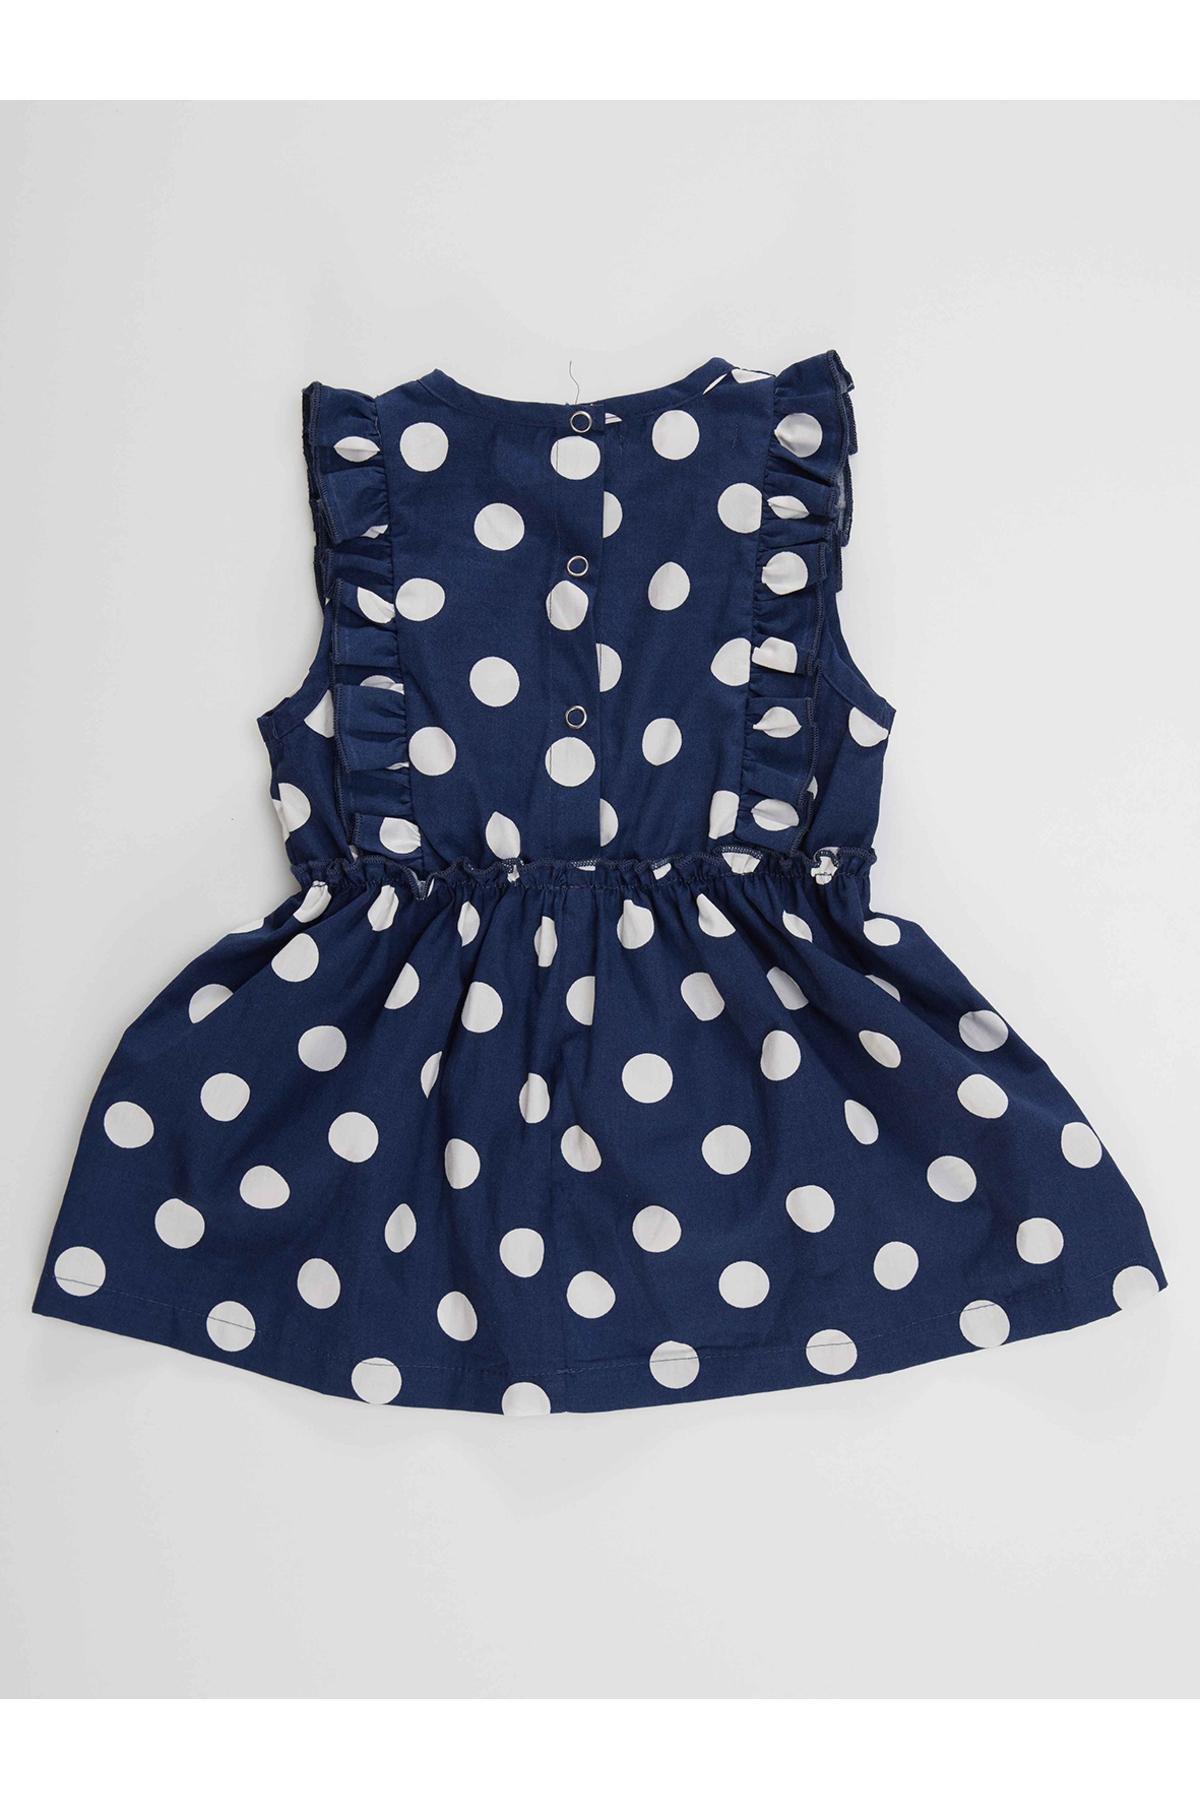 Denokids - Navy Polka Dot Dress, Baby Girls